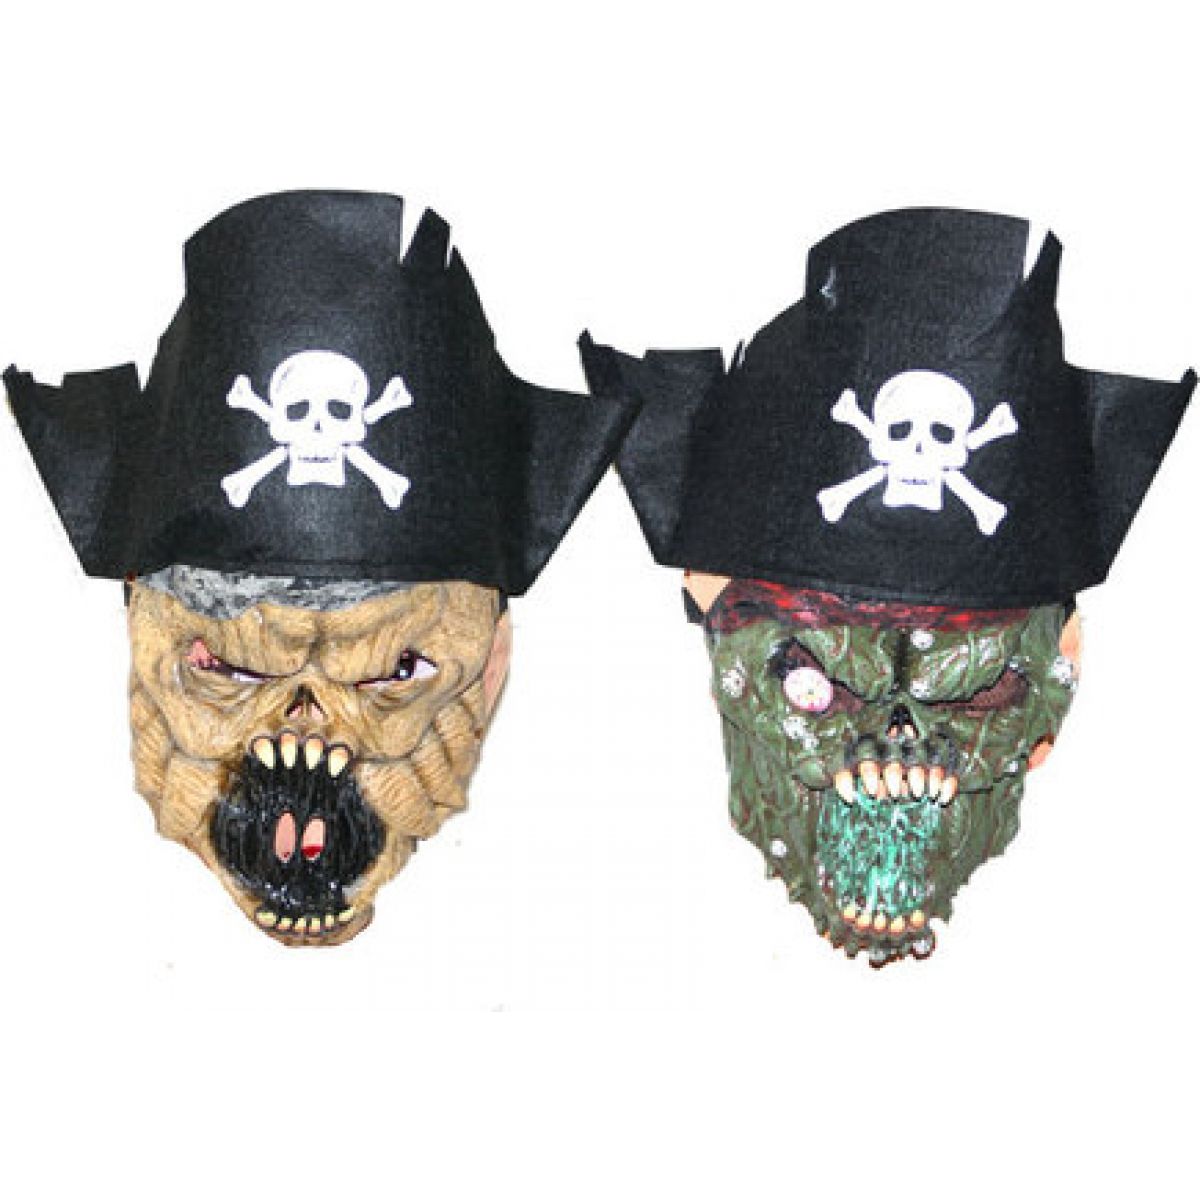 Rappa Maska pirát s čepicí vinyl, 2 druhy